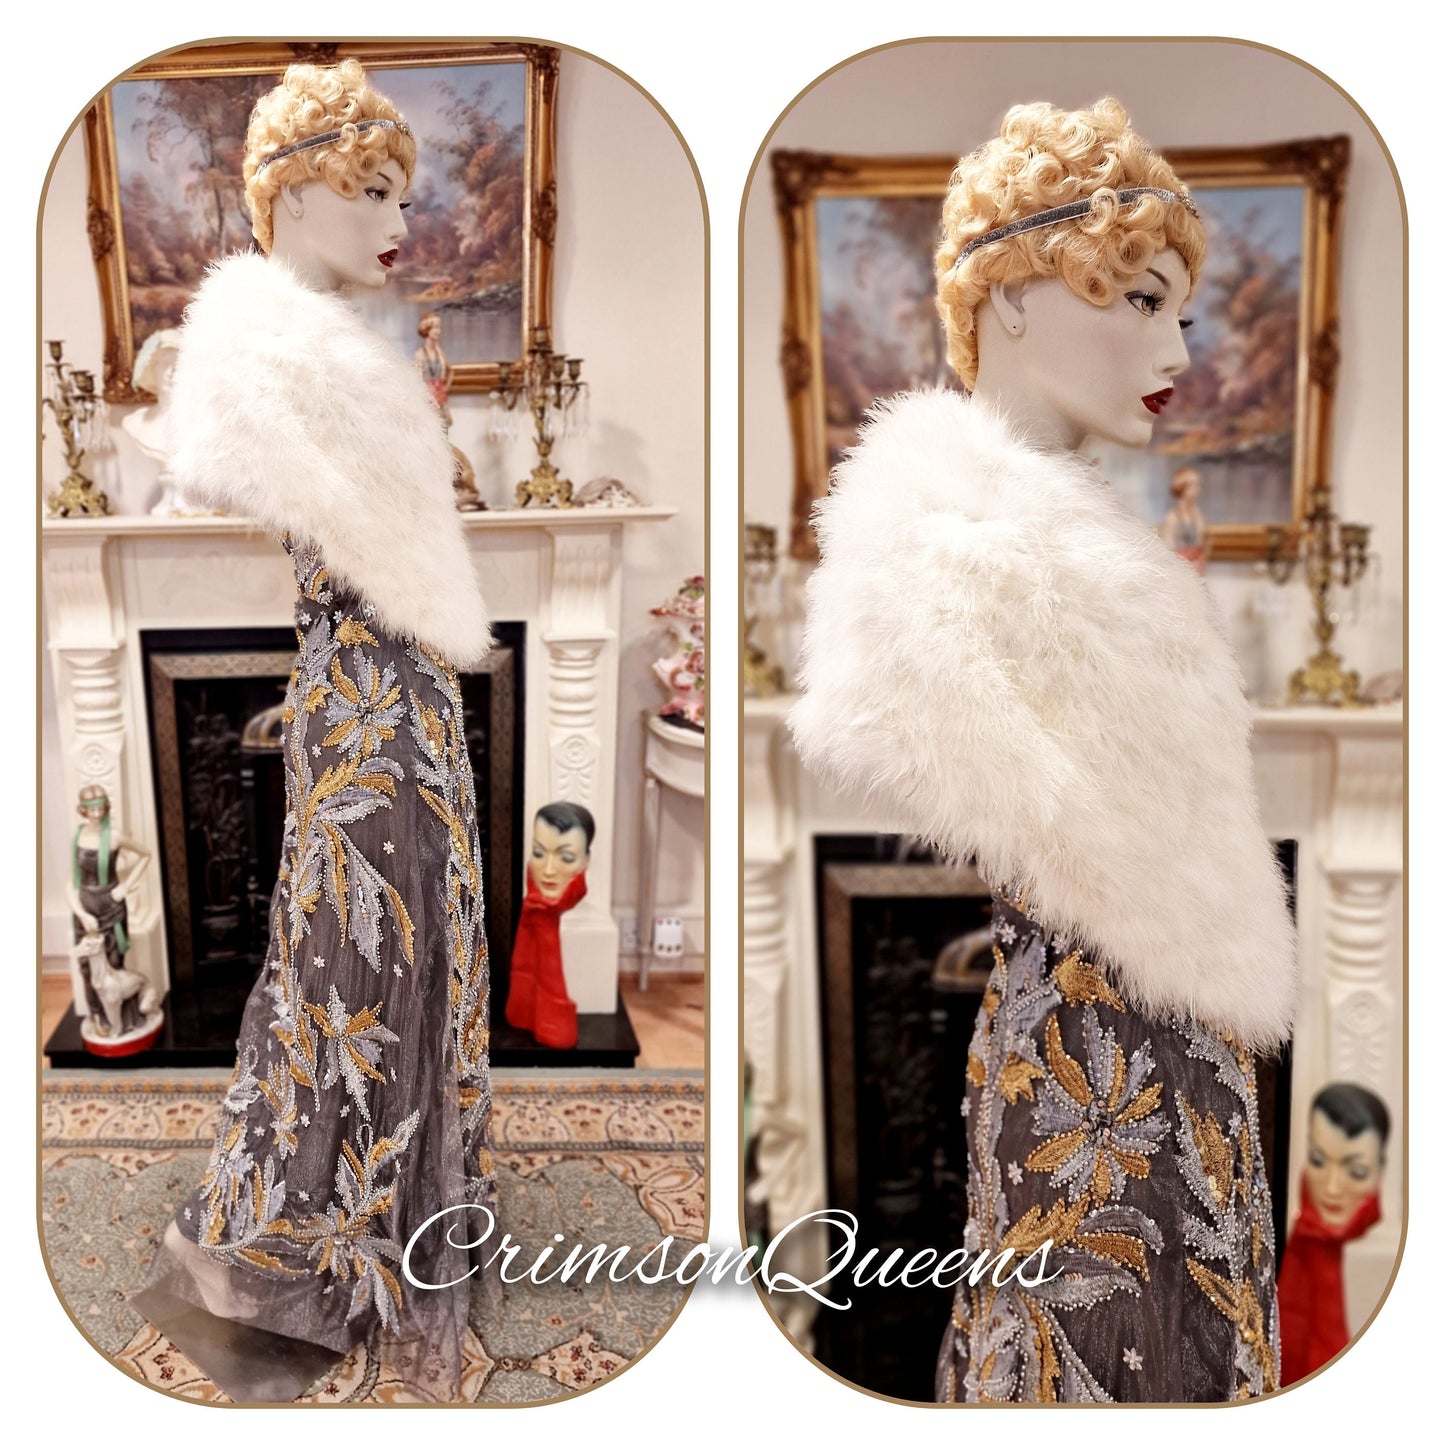 Downton Abbey dress vintage embellished beaded embroidered silver leaf feather statement gold dress  UK 4 6 US 0 2